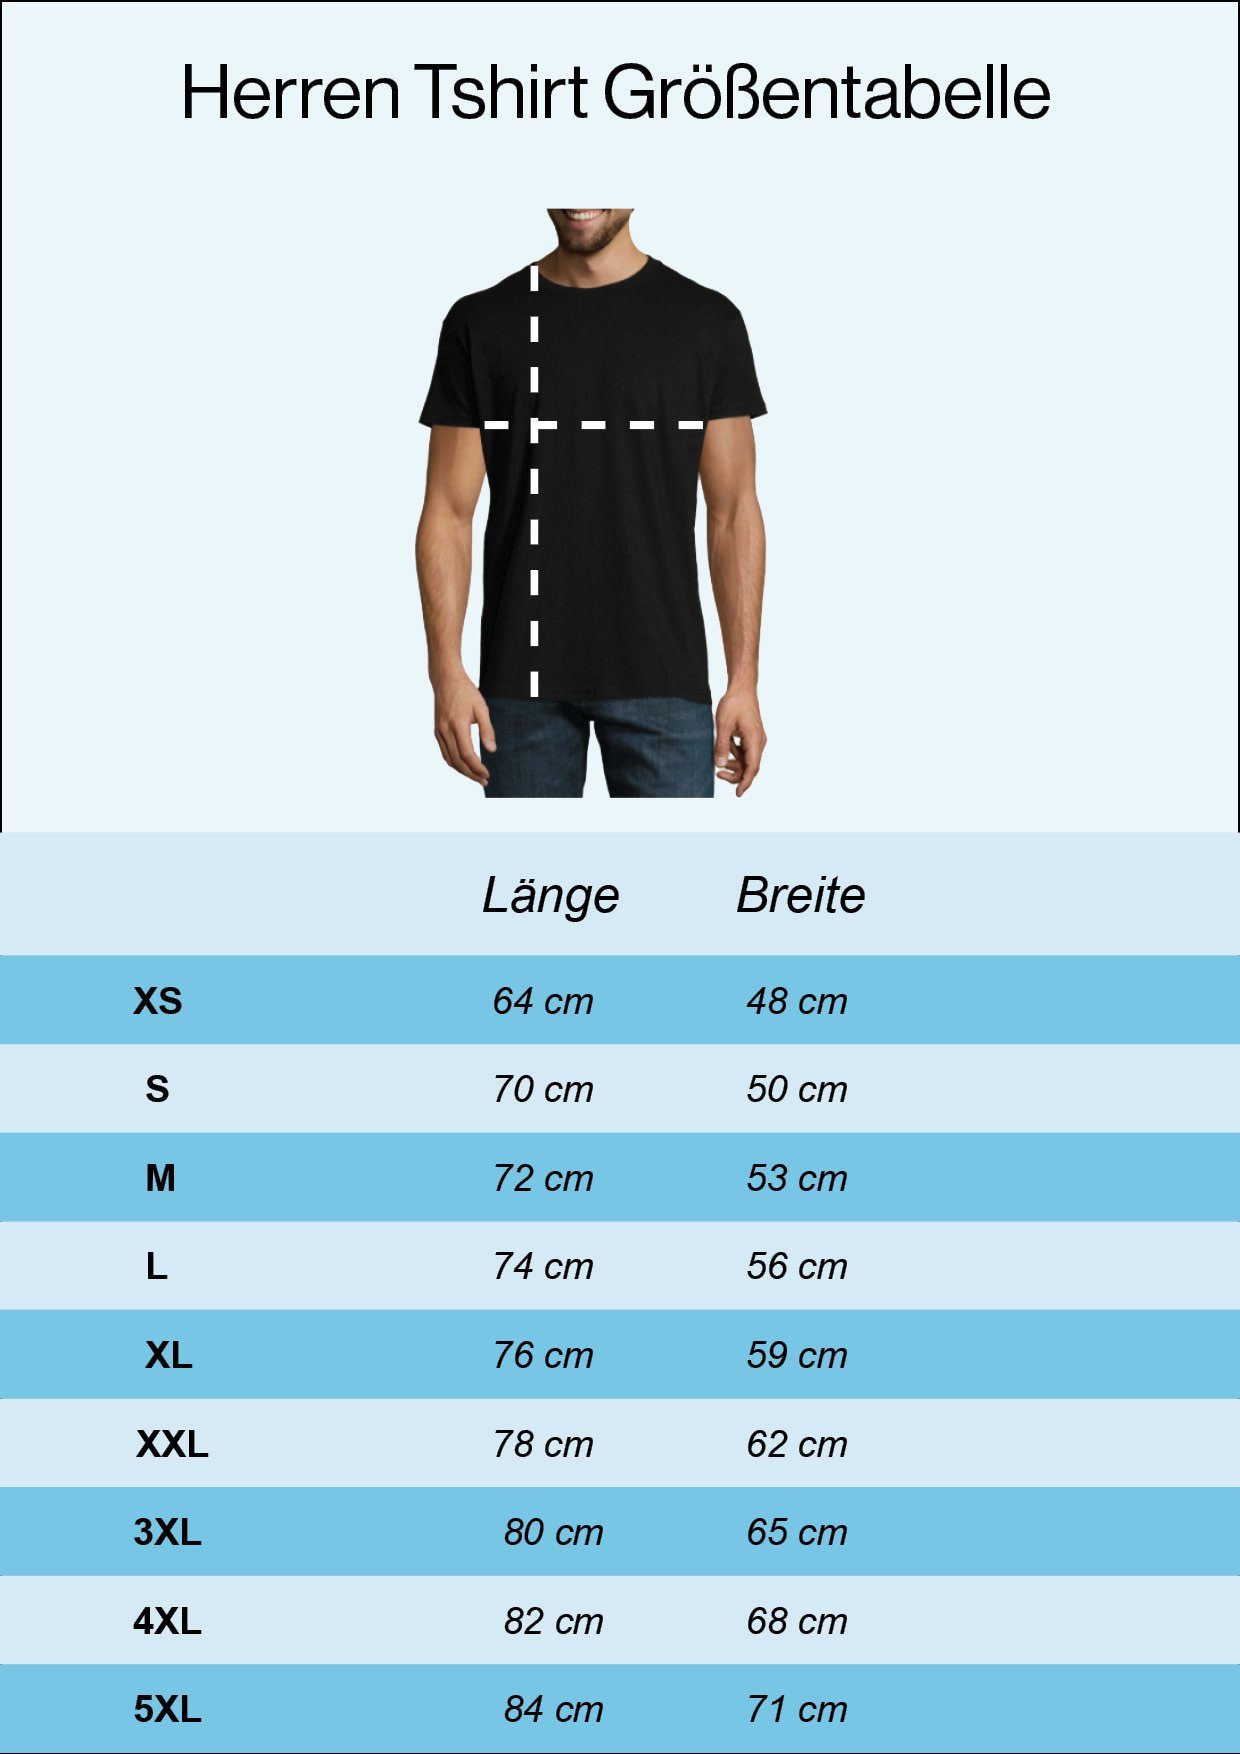 Designz trendigem mit Janeiro Rio T-Shirt Frontprint Schwarz Shirt Herren Youth De